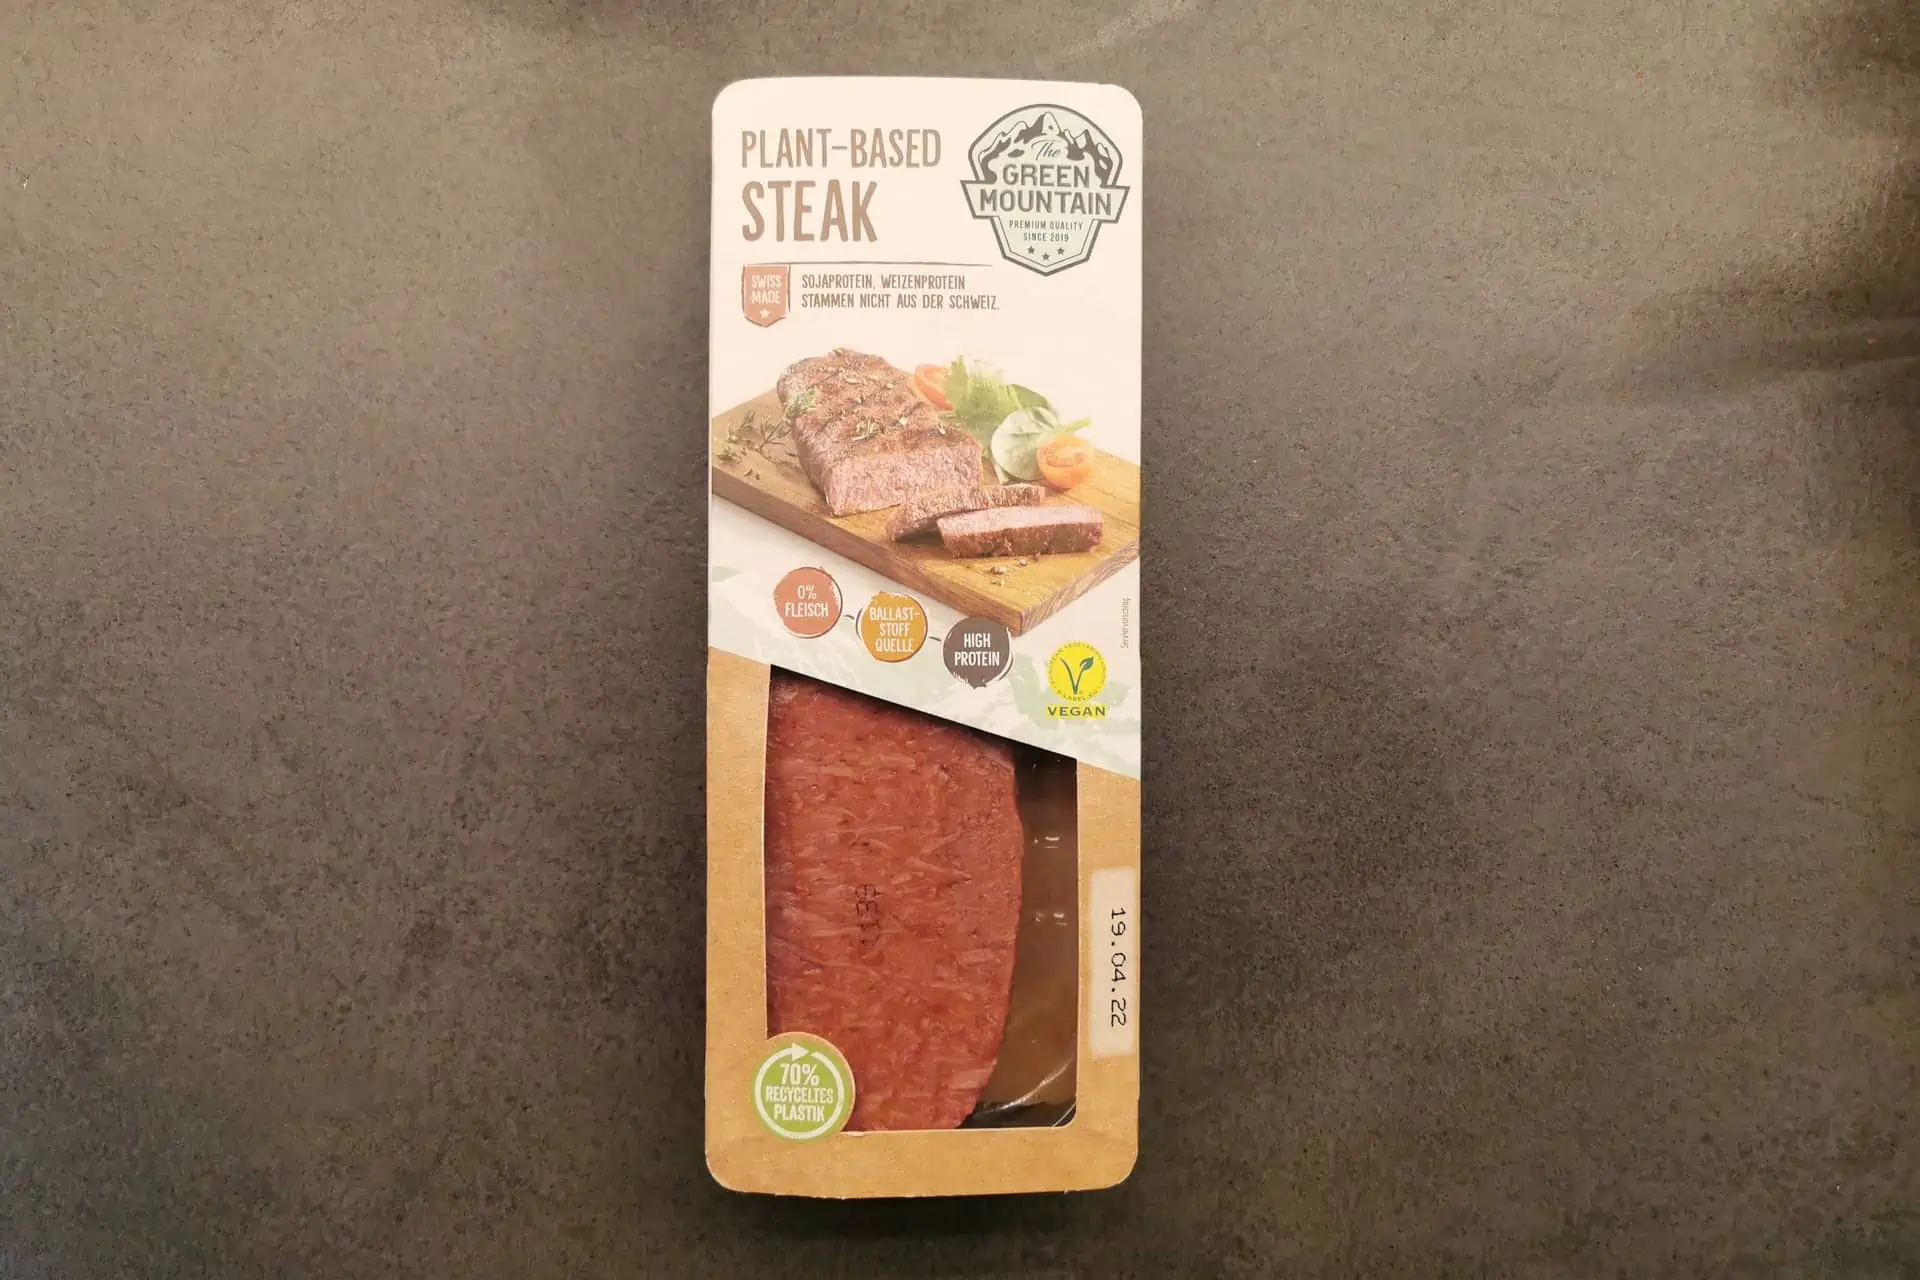 The Green Mountain - Plant-based Steak